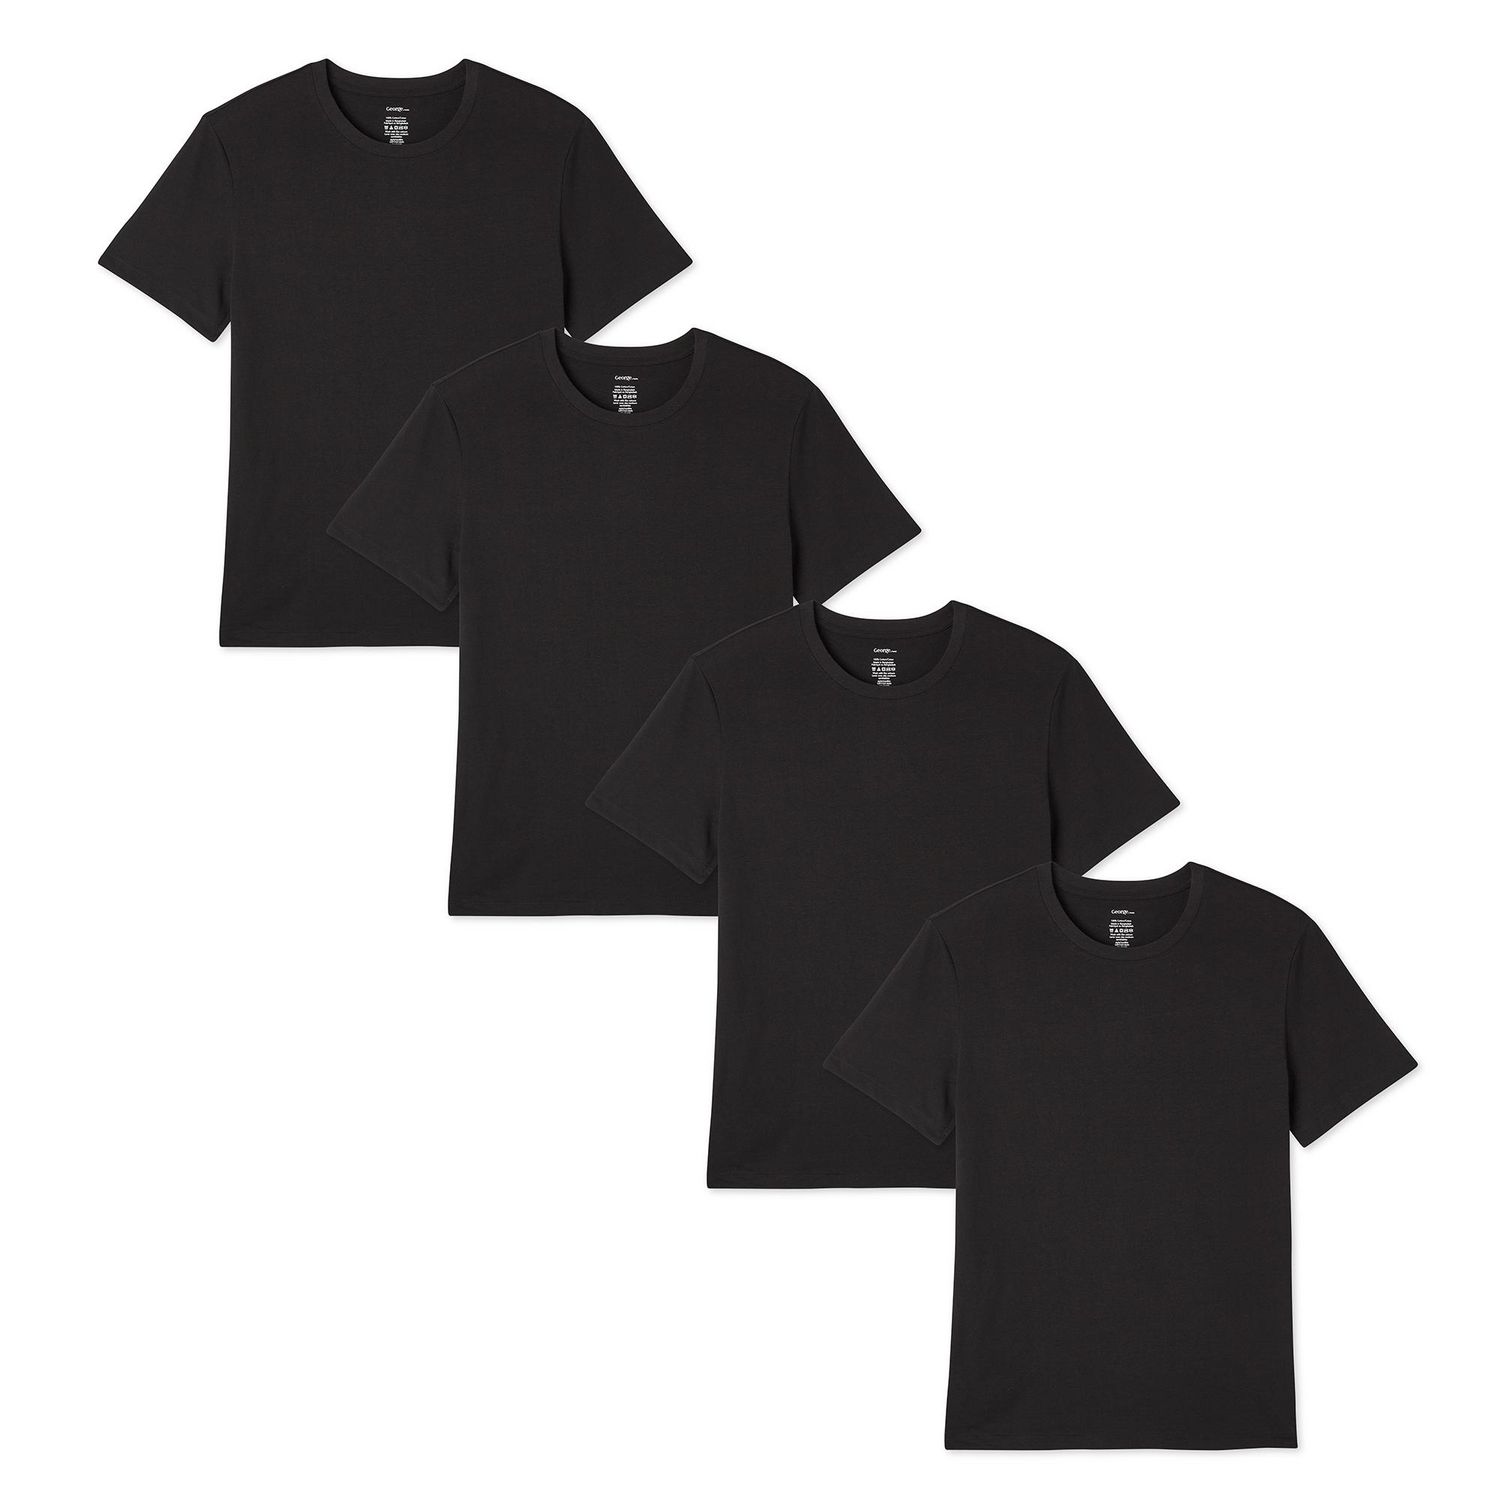 Crew Neck T-Shirts for Men - Buy Men Crew Neck T Shirts Online at